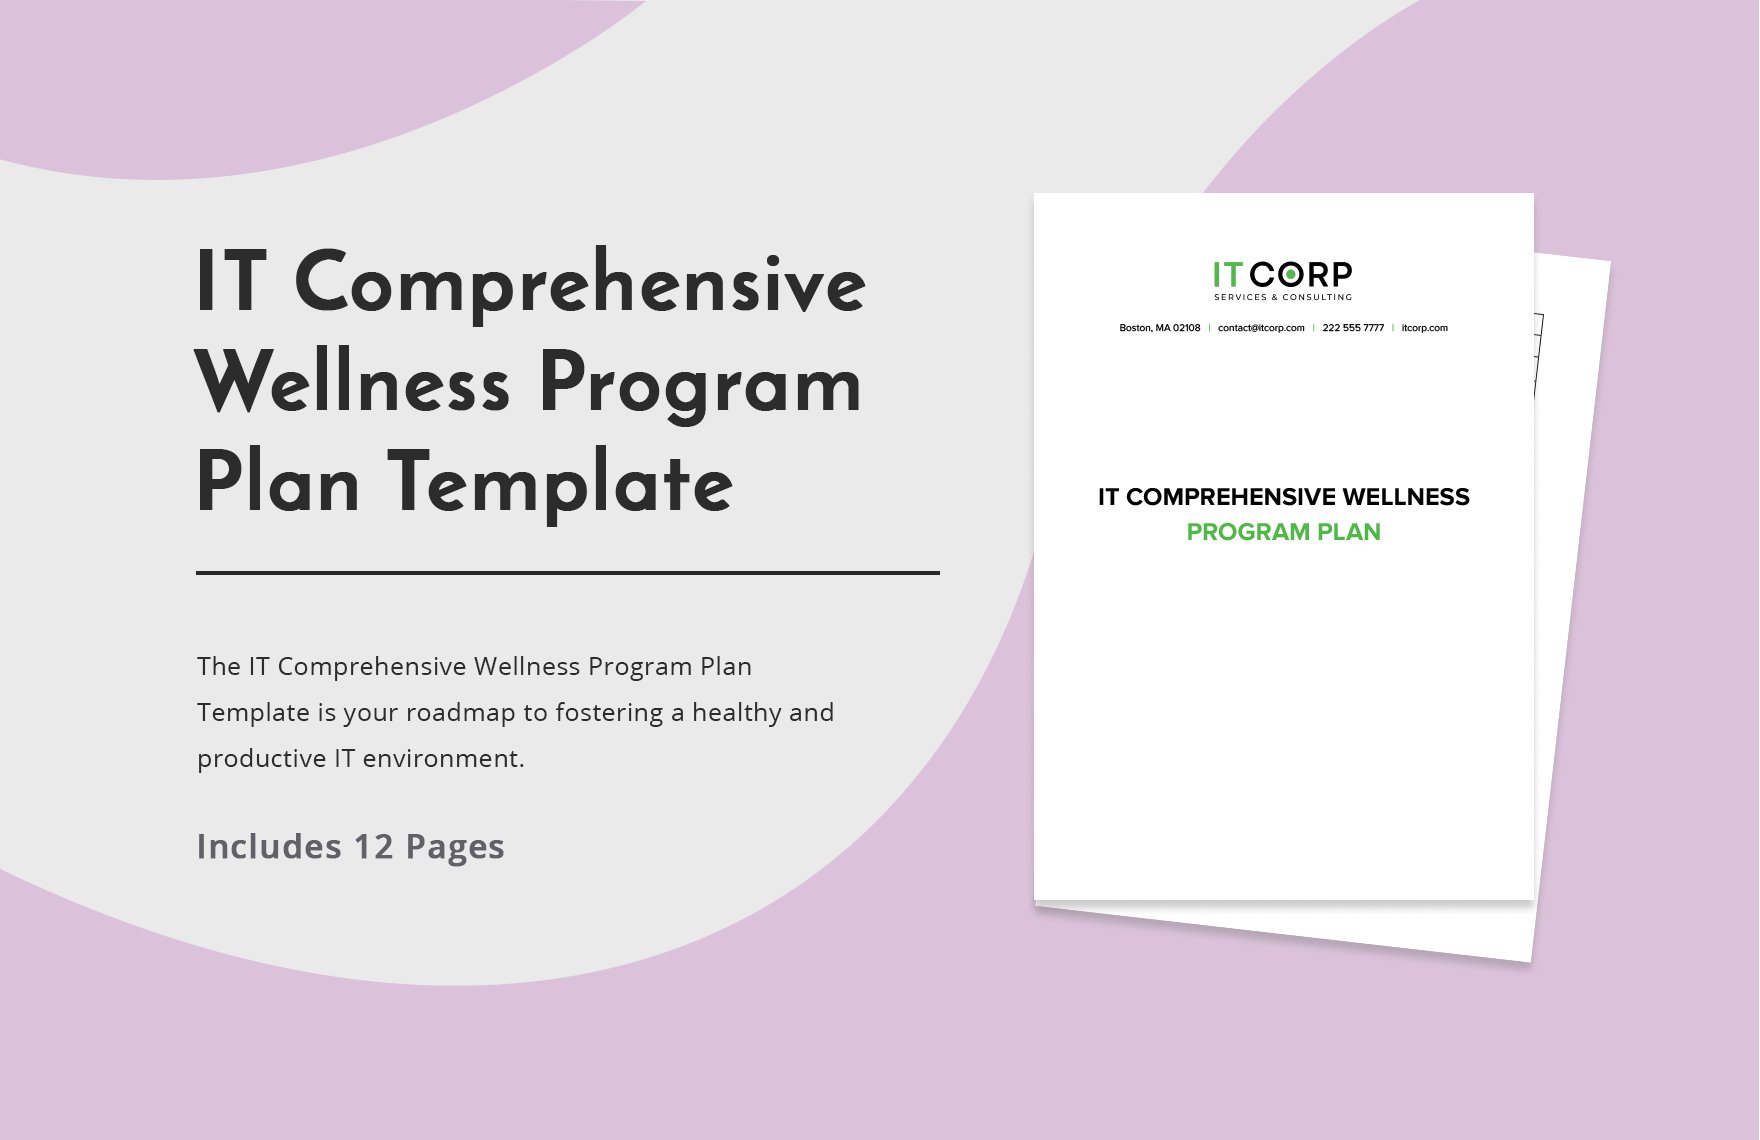 IT Comprehensive Wellness Program Plan Template